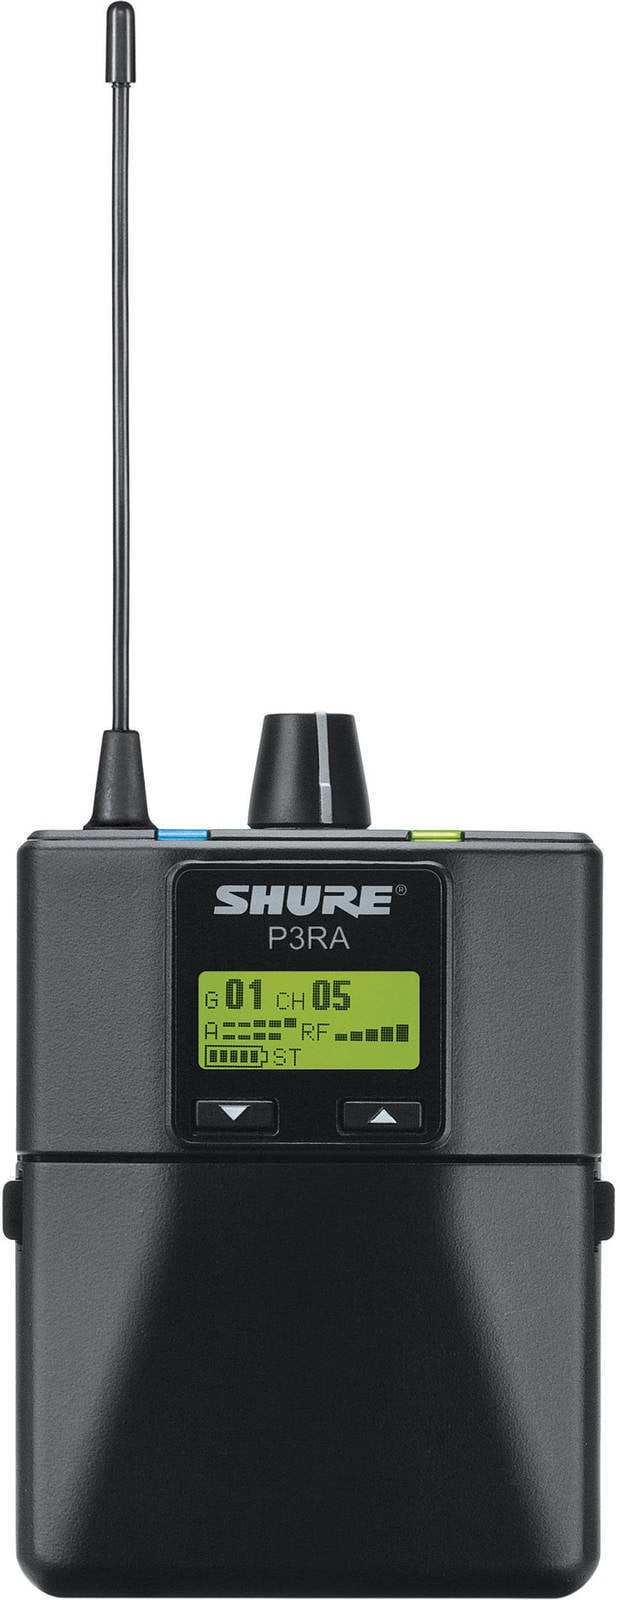 Element do systemów dousznych Shure P3RA-H20 - PSM 300 Bodypack Receiver H20: 518–542 MHz